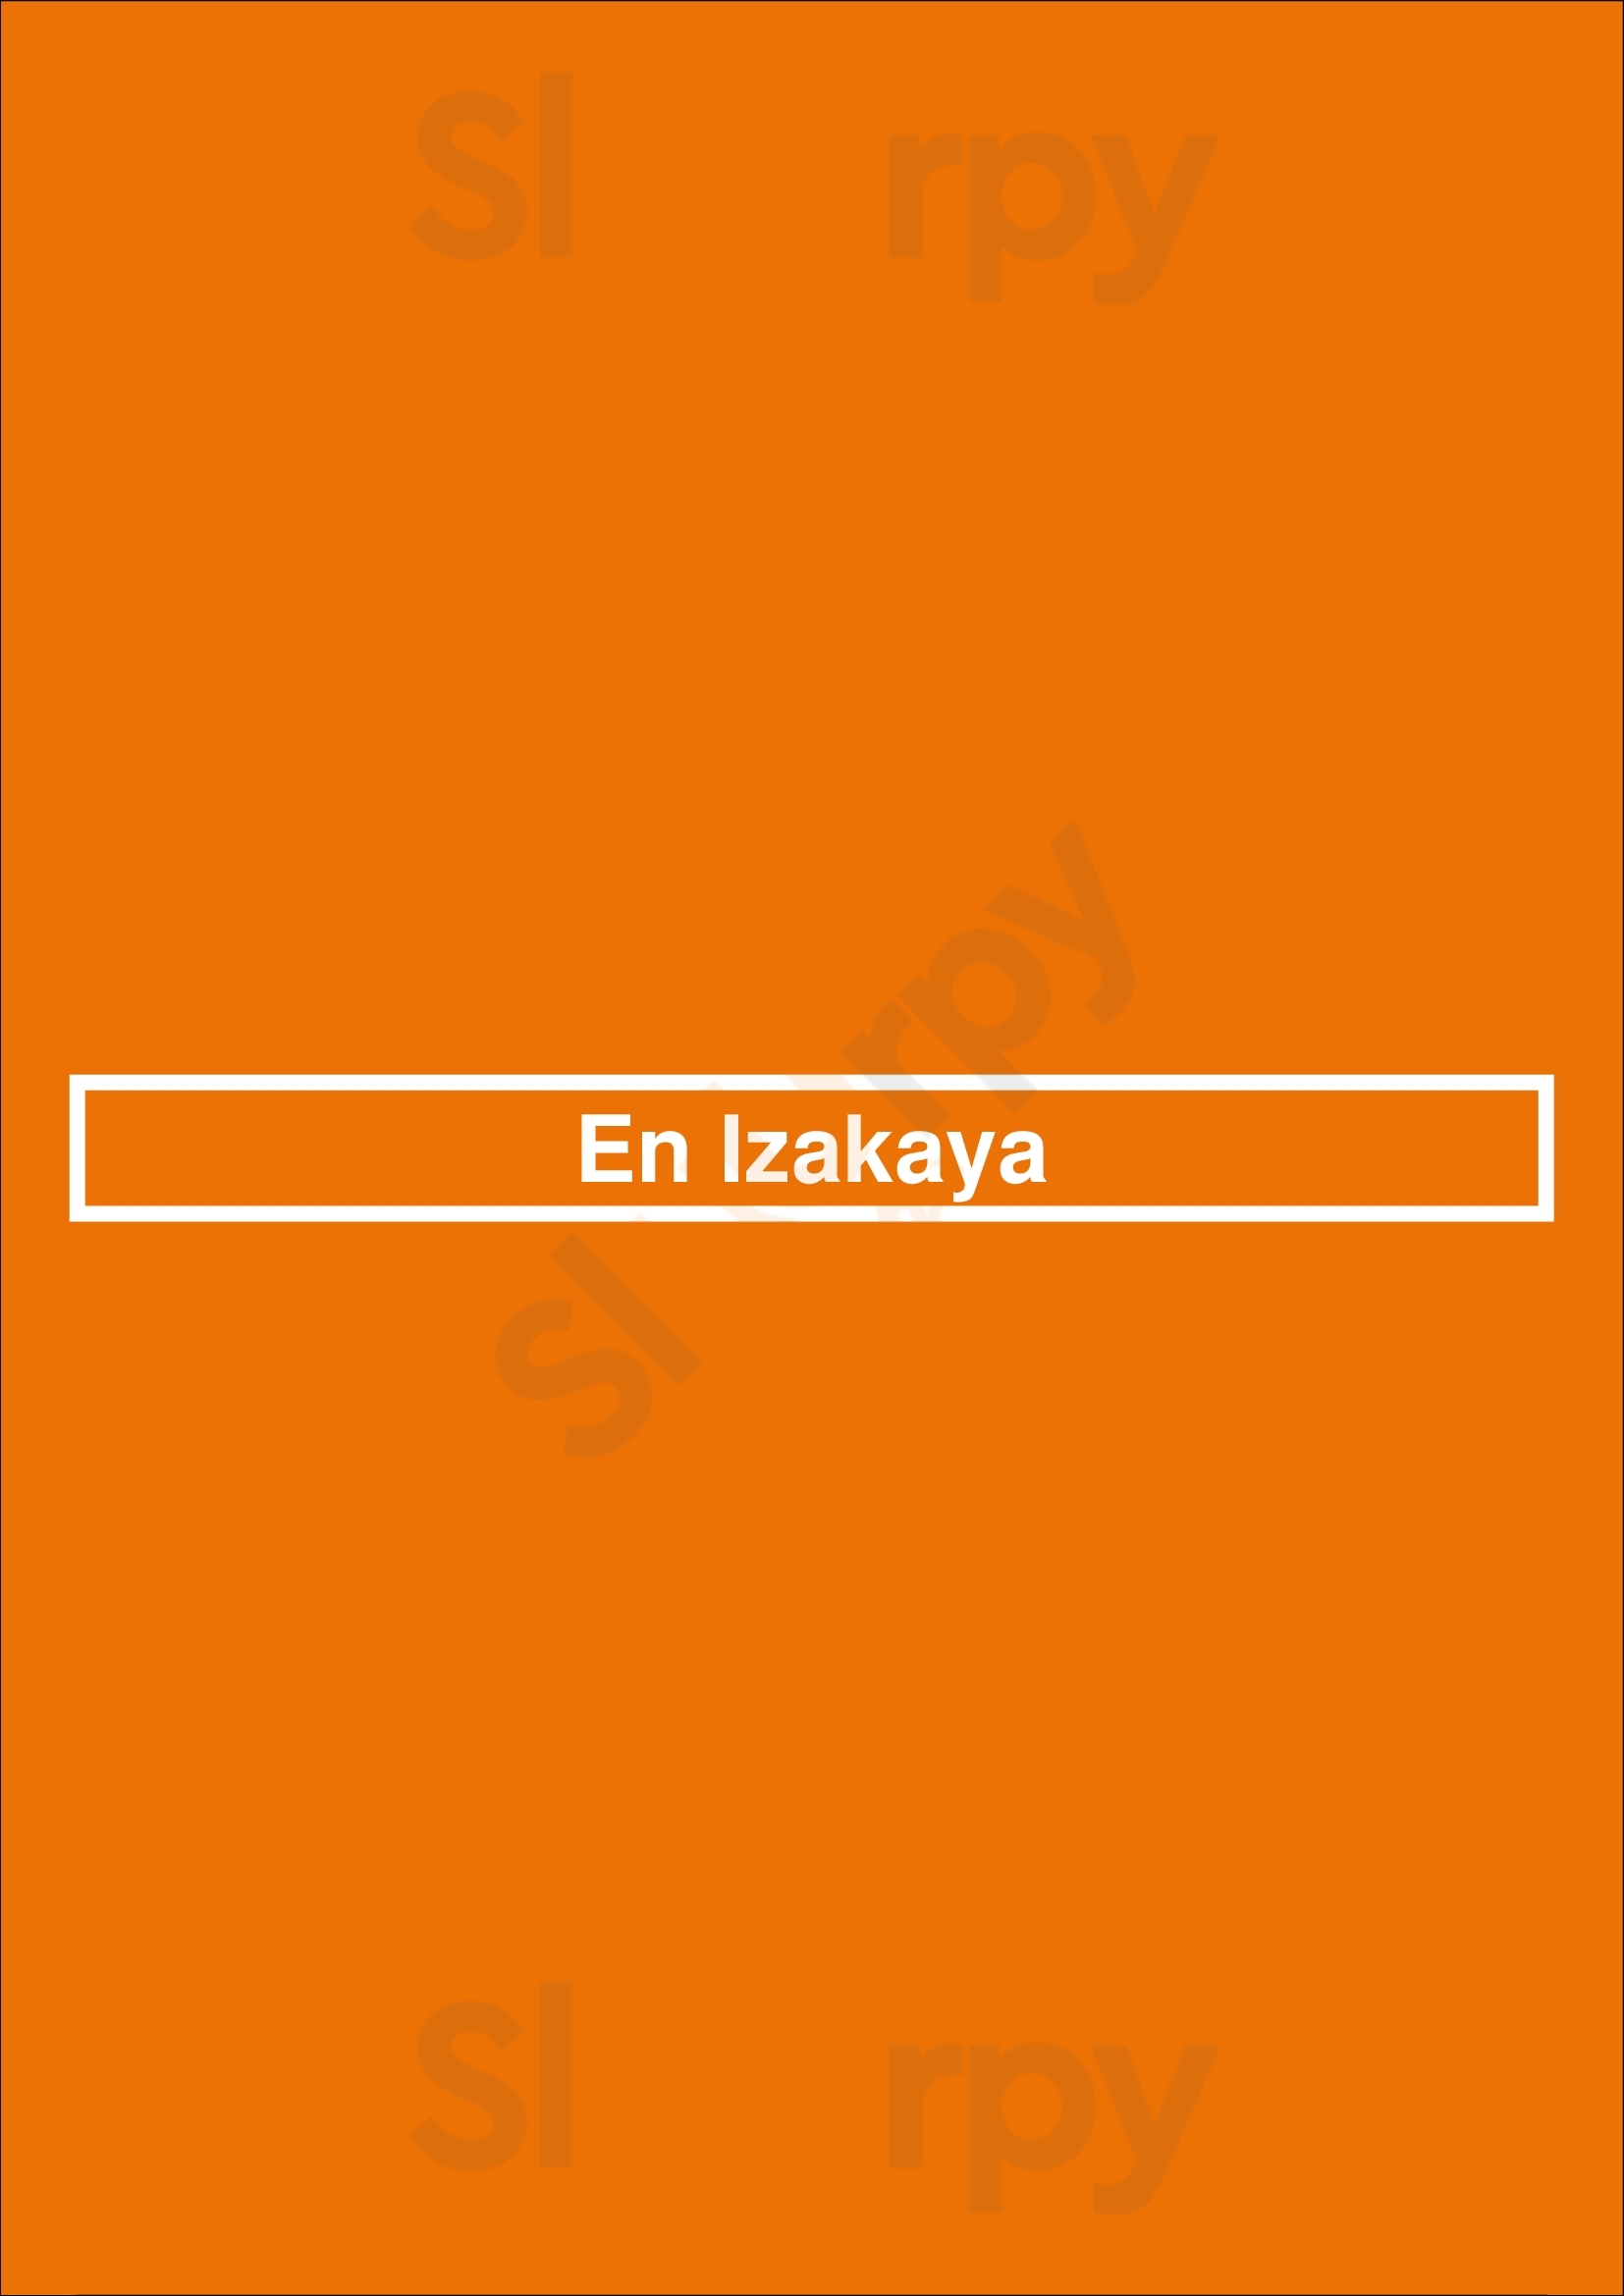 En Izakaya Balaclava Menu - 1